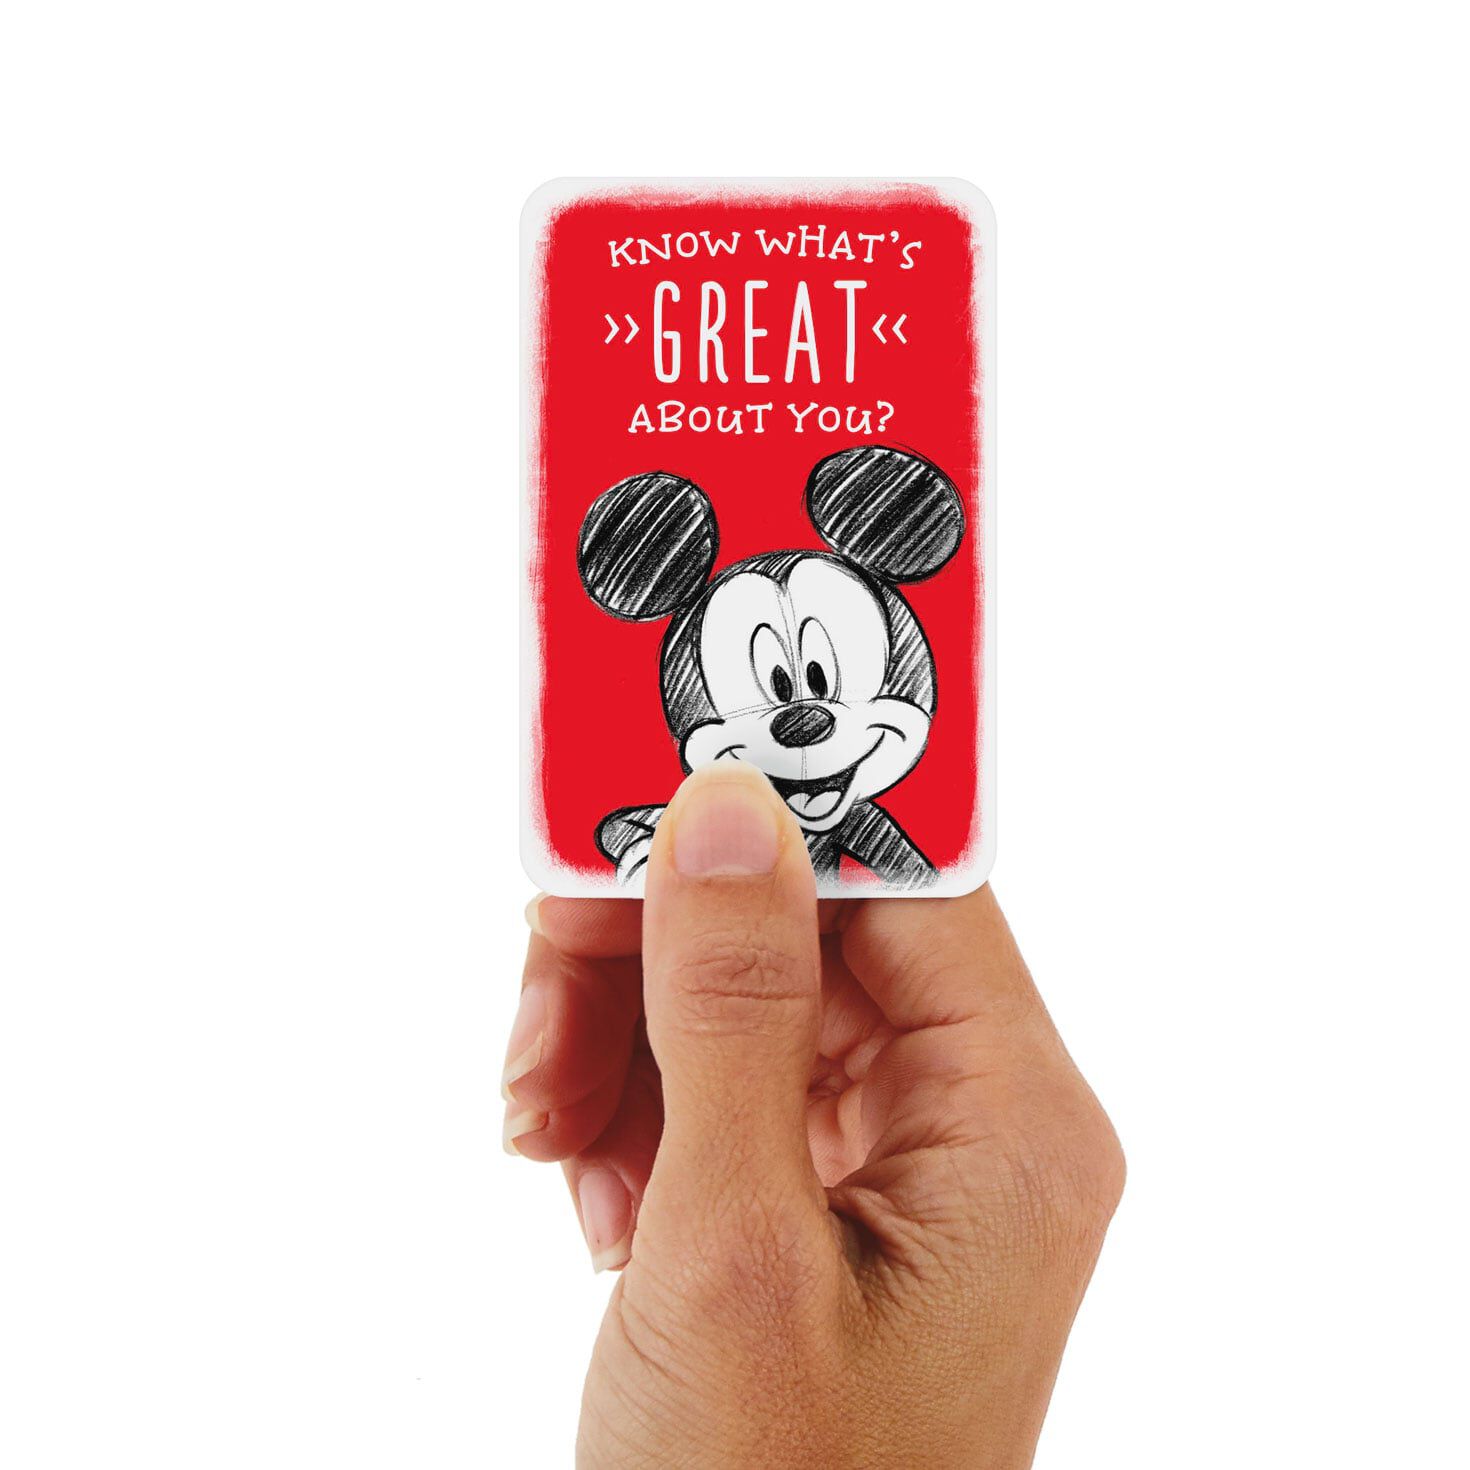 3 Items Lot Of 6 Disney Mickey Mouse Holiday Cards Tiny Christmas Carol Book+